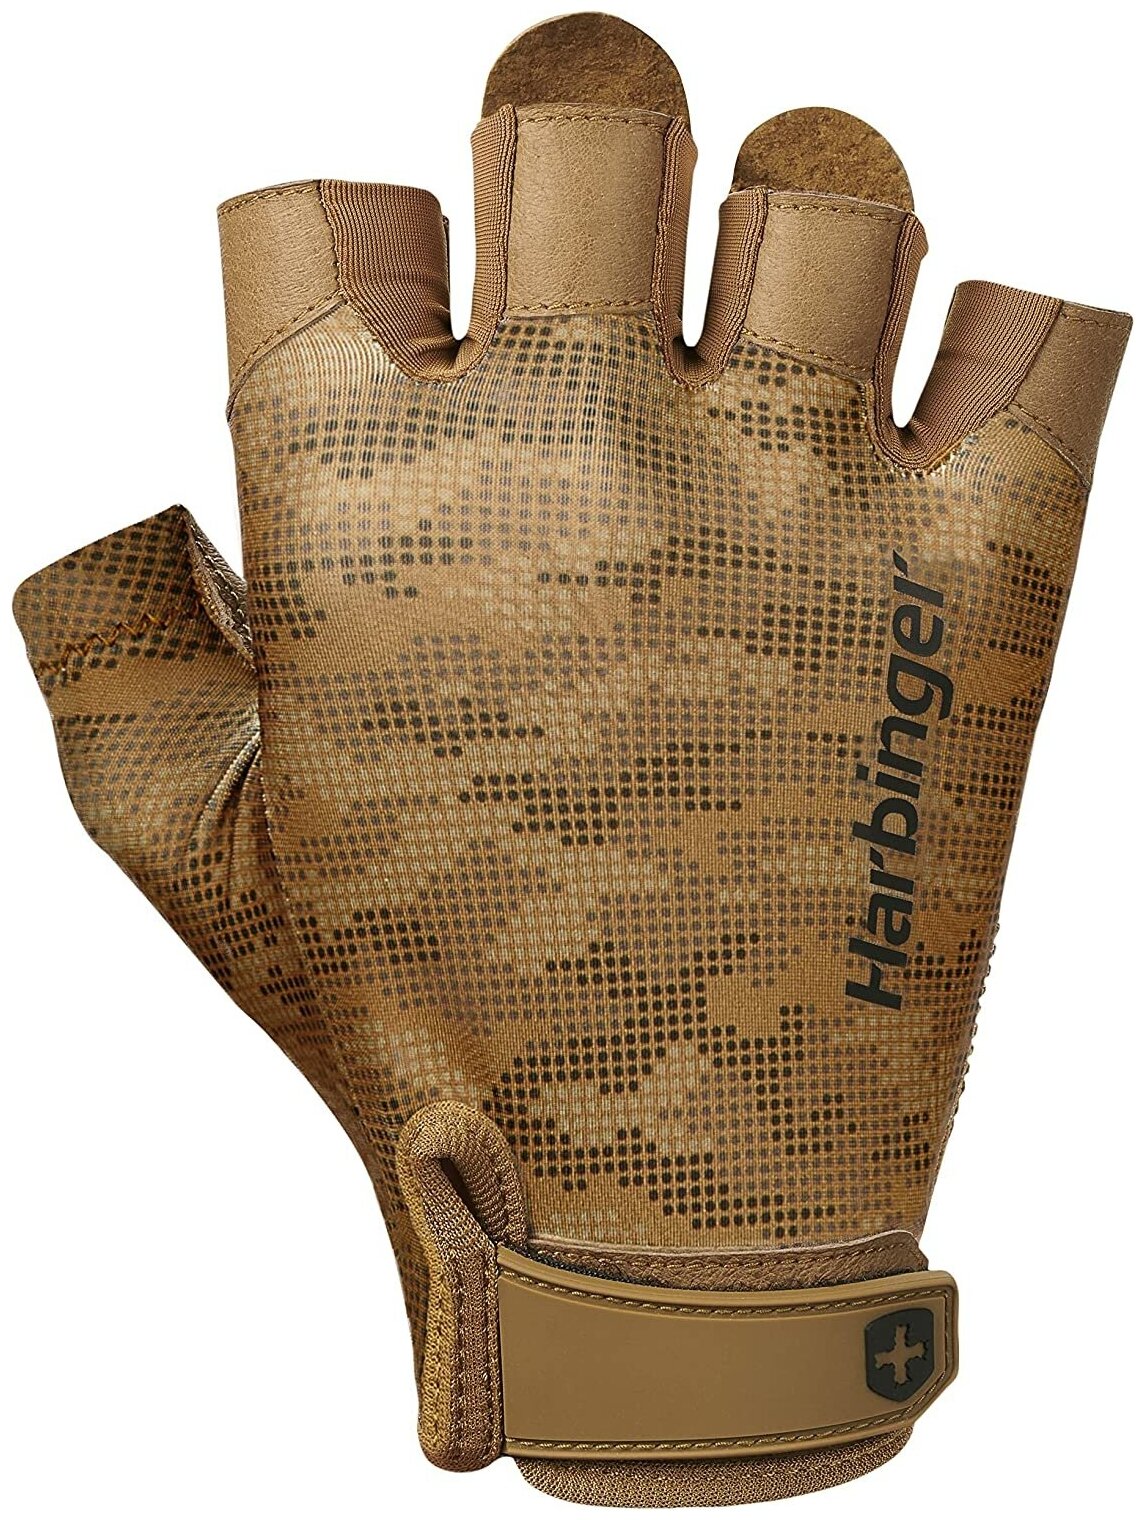 Harbinger Pro CAMO Gloves, размер L